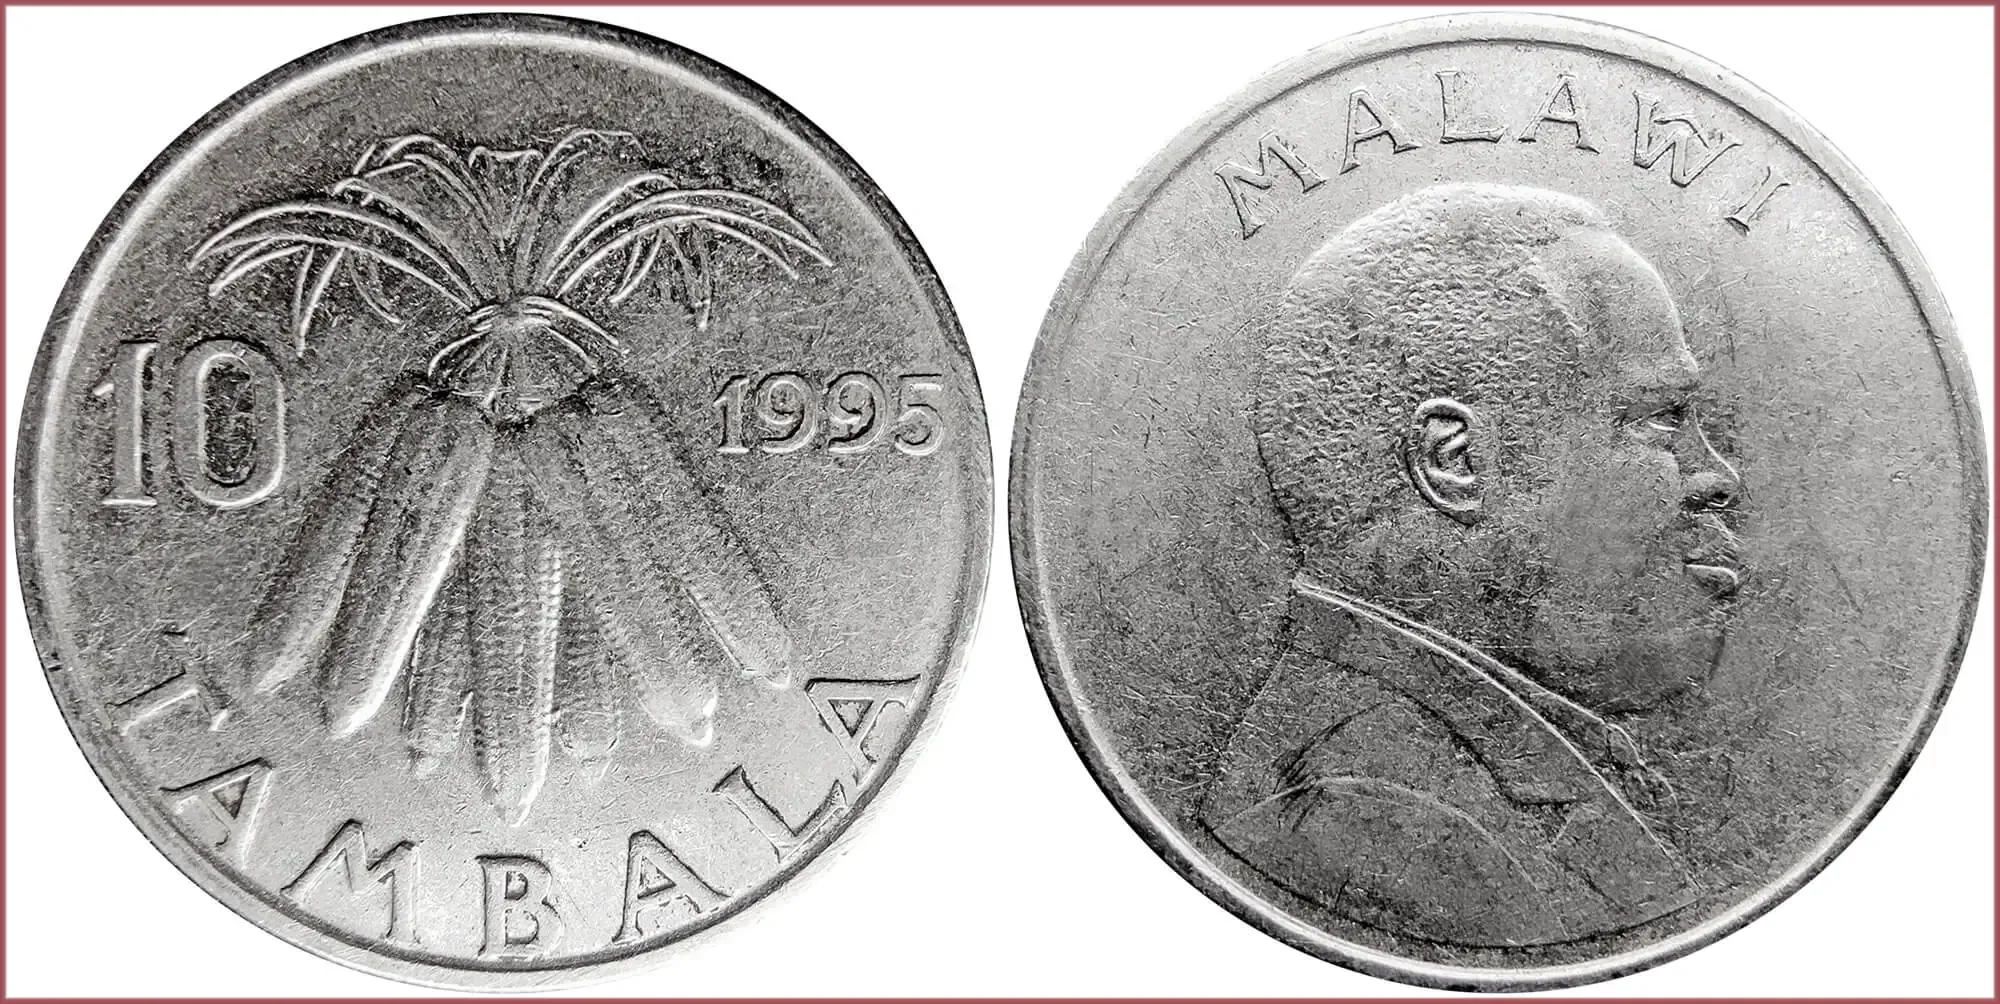 10 tambala, 1995: Republic of Malawi